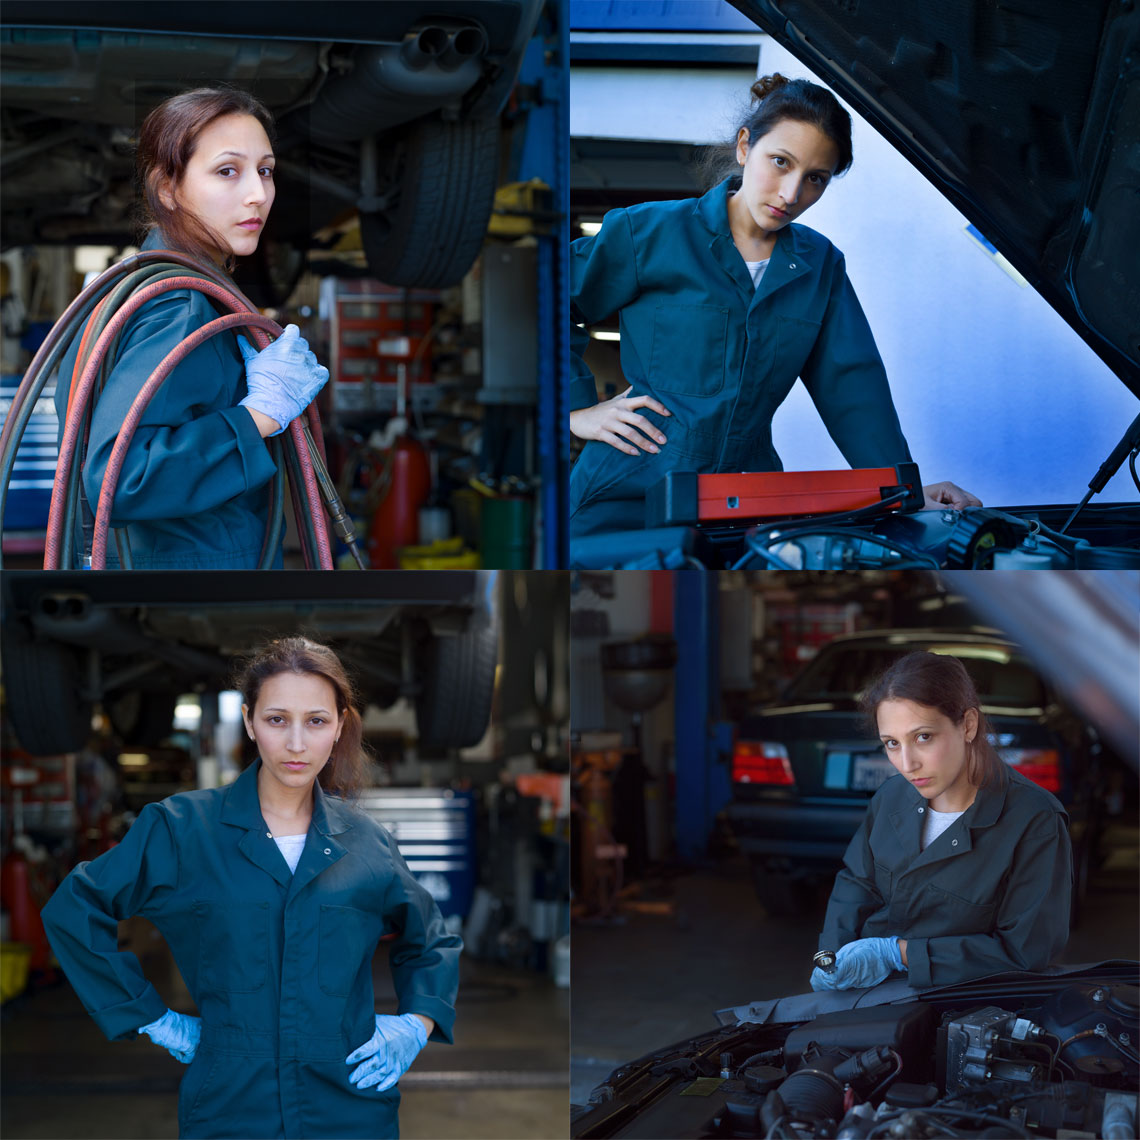 Woman-auto-mechanic